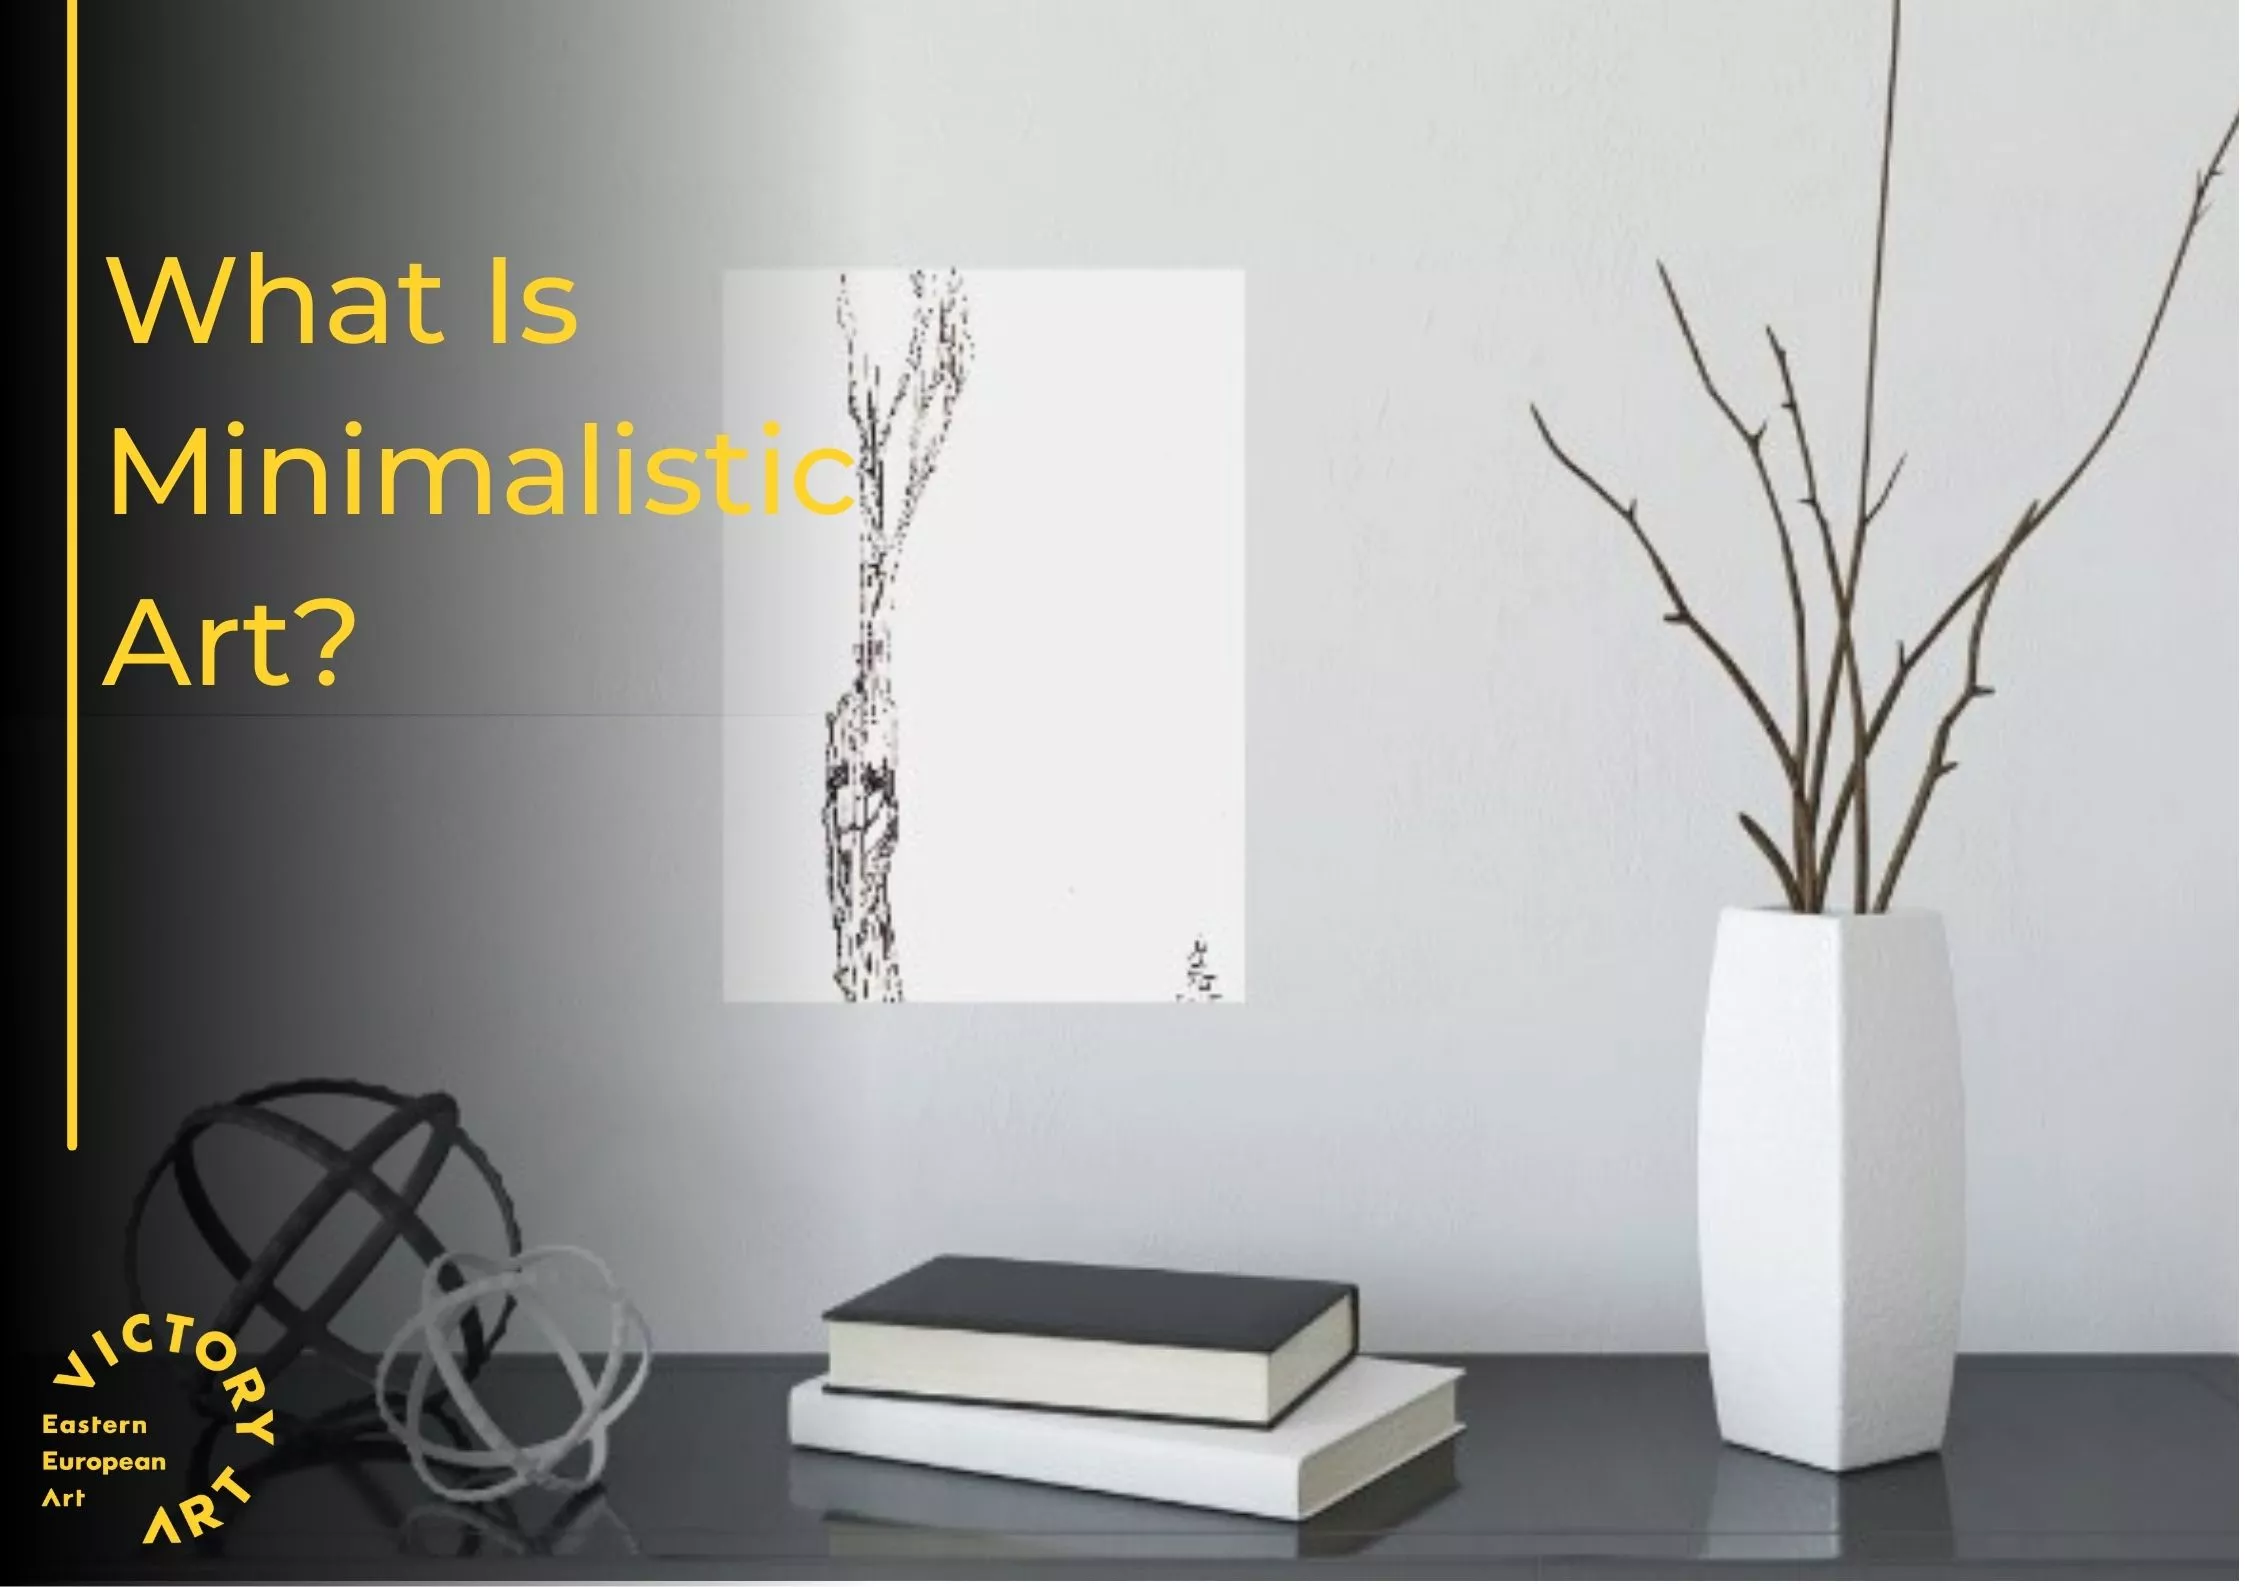 What is Minimalistic Art?